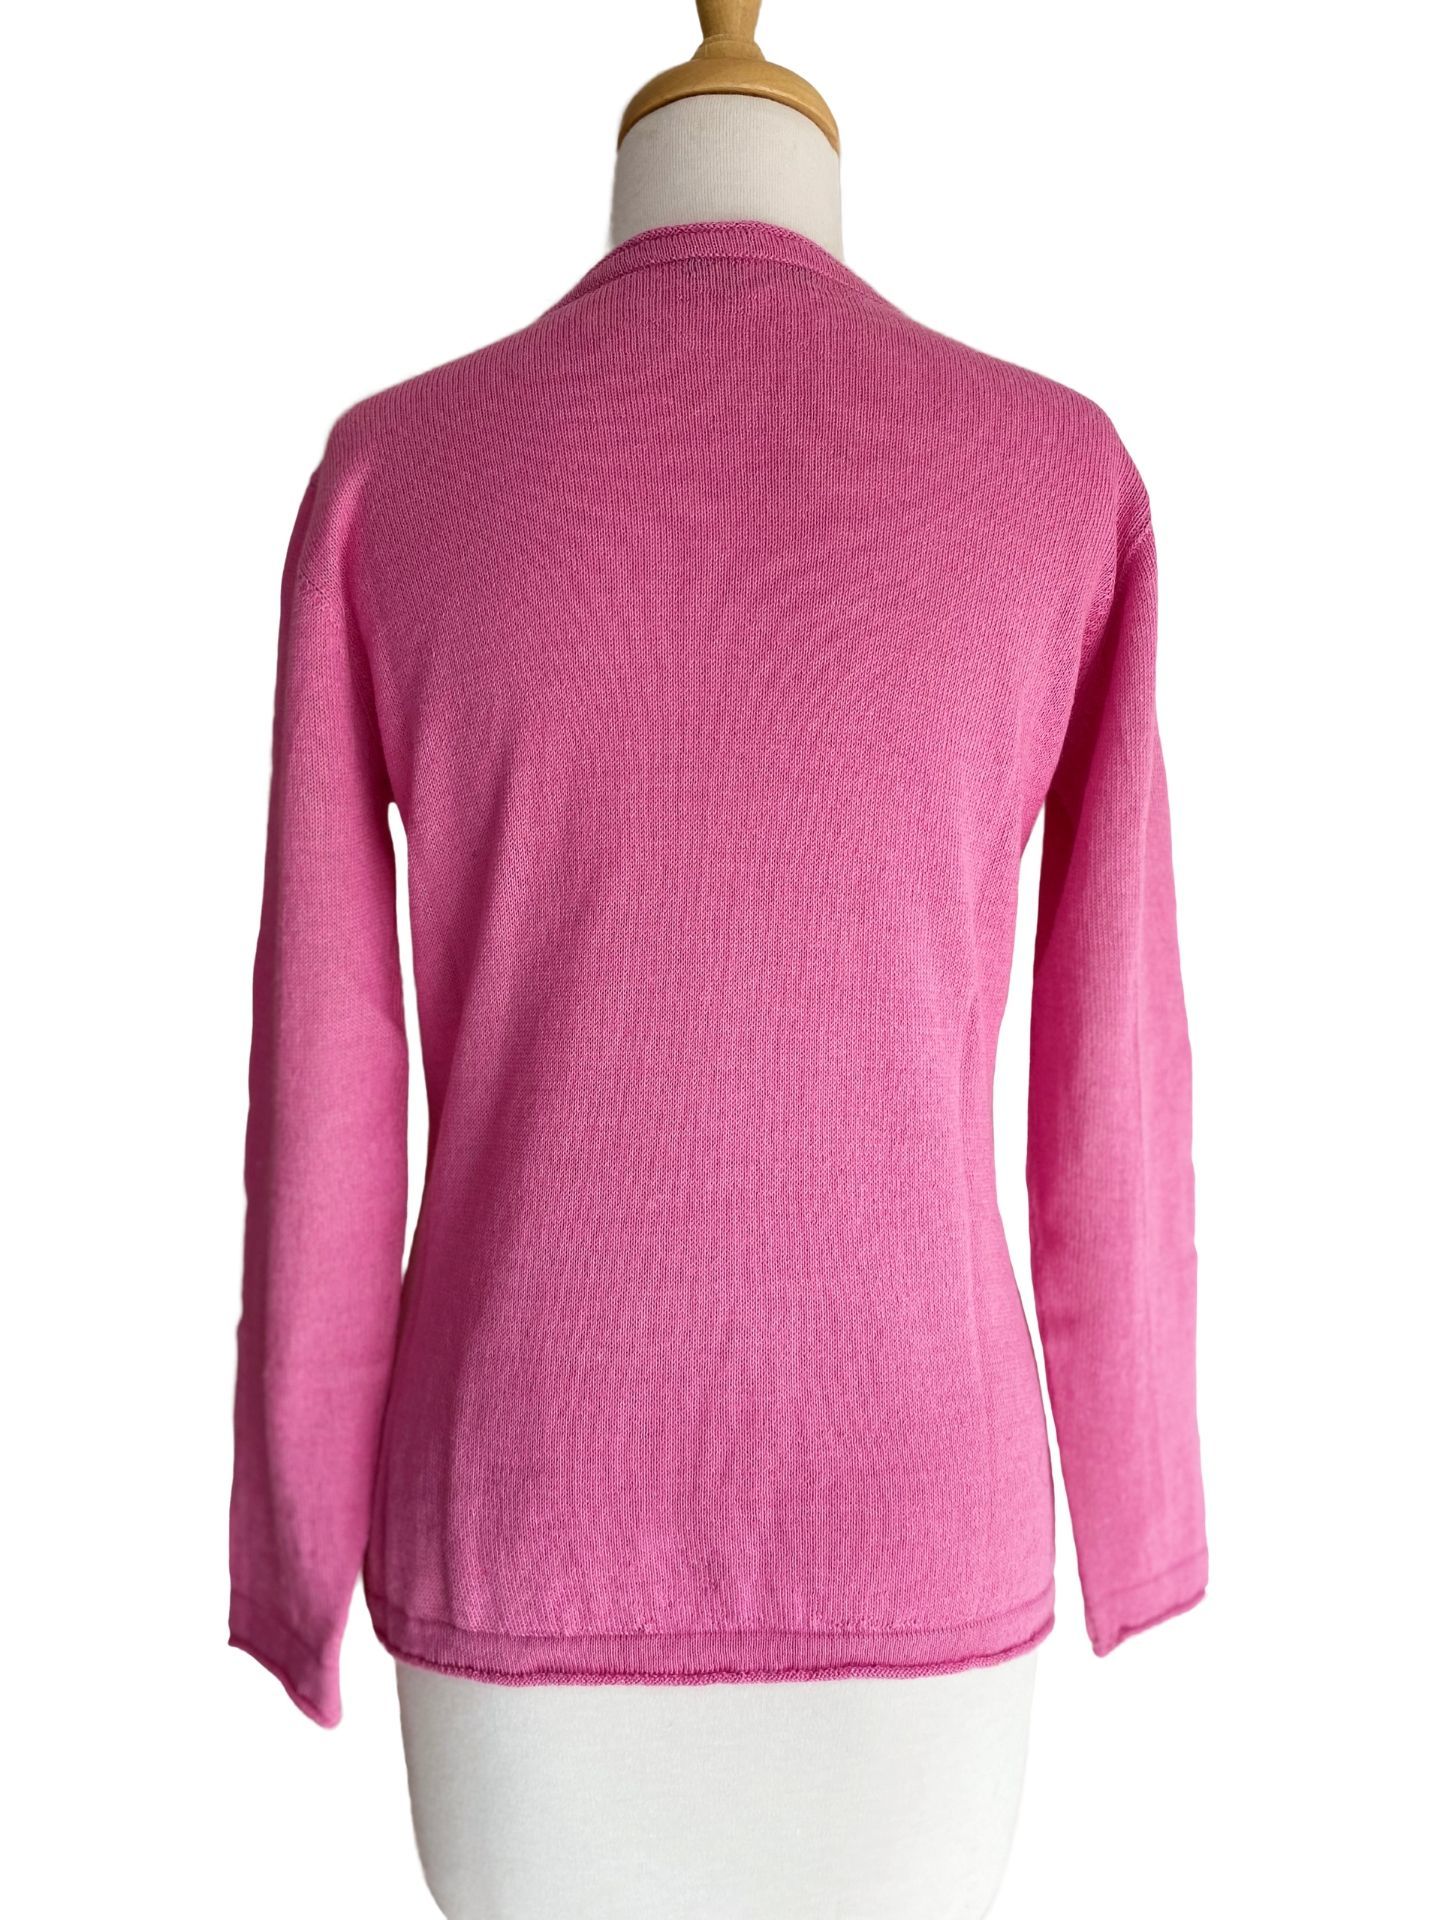 Briella Sweater Candy Pink - 2